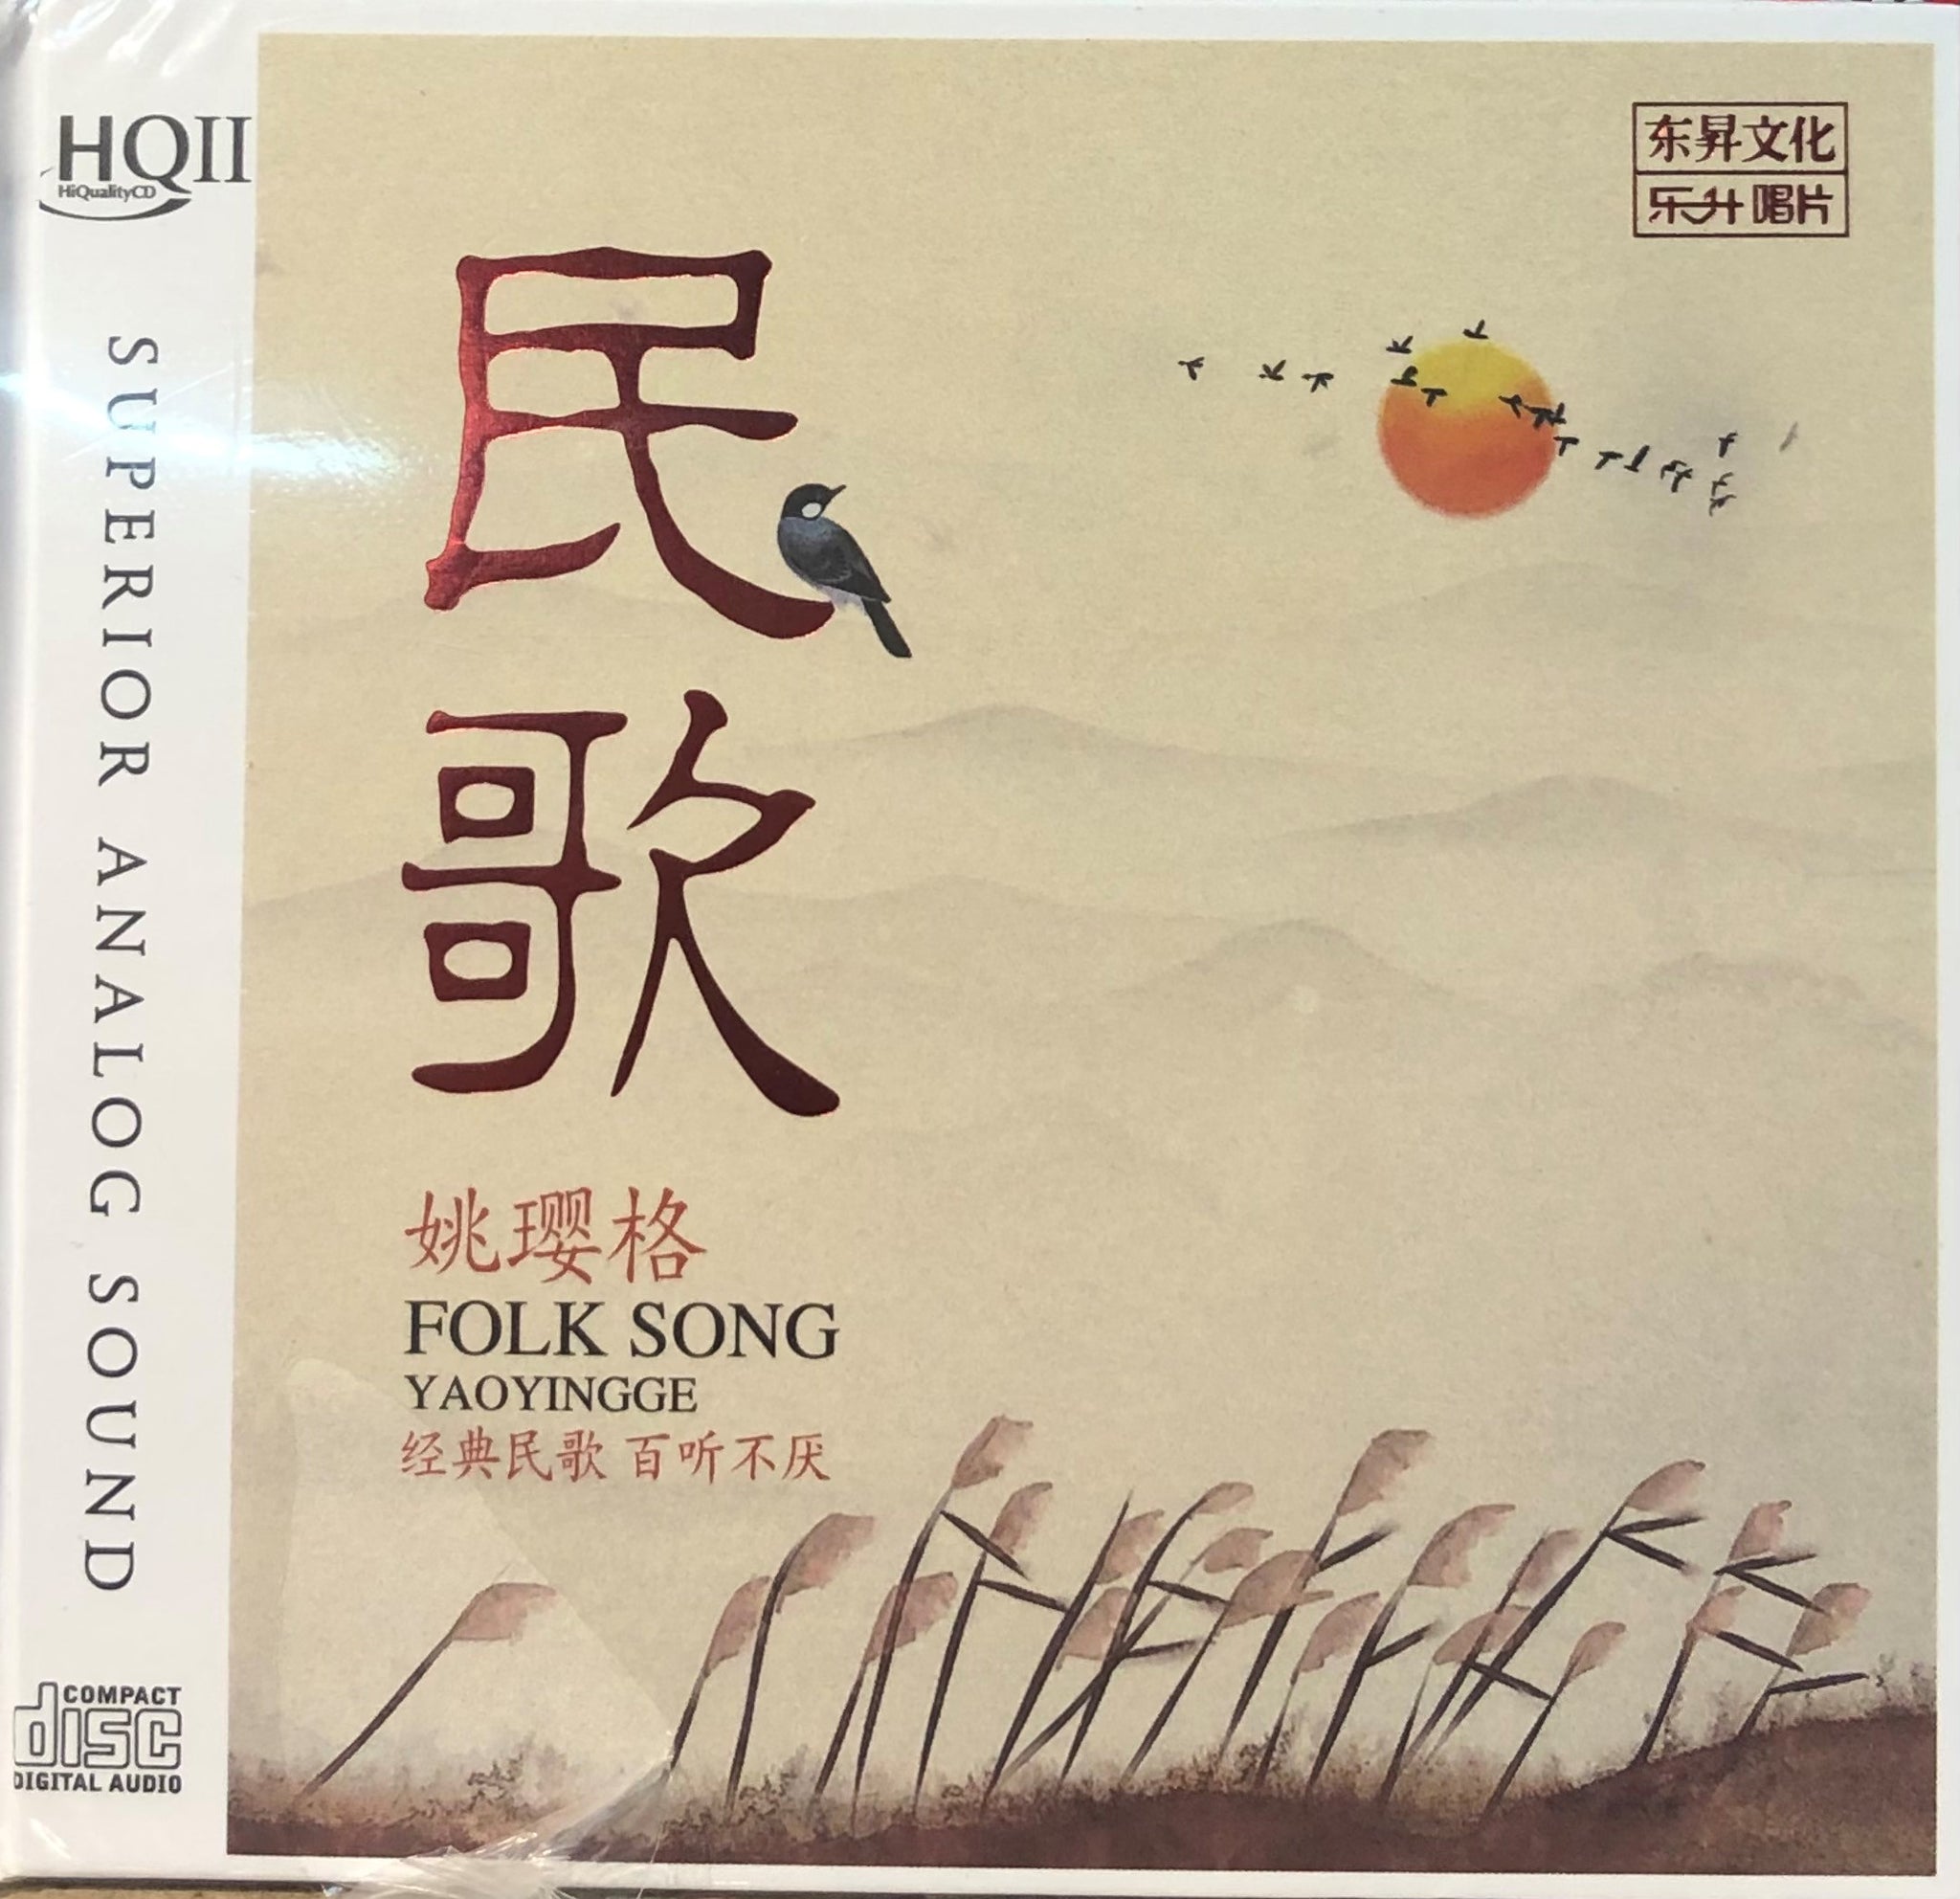 YAO YING GE - 姚瓔格 FOLK SONG 民歌 (HQII) CD